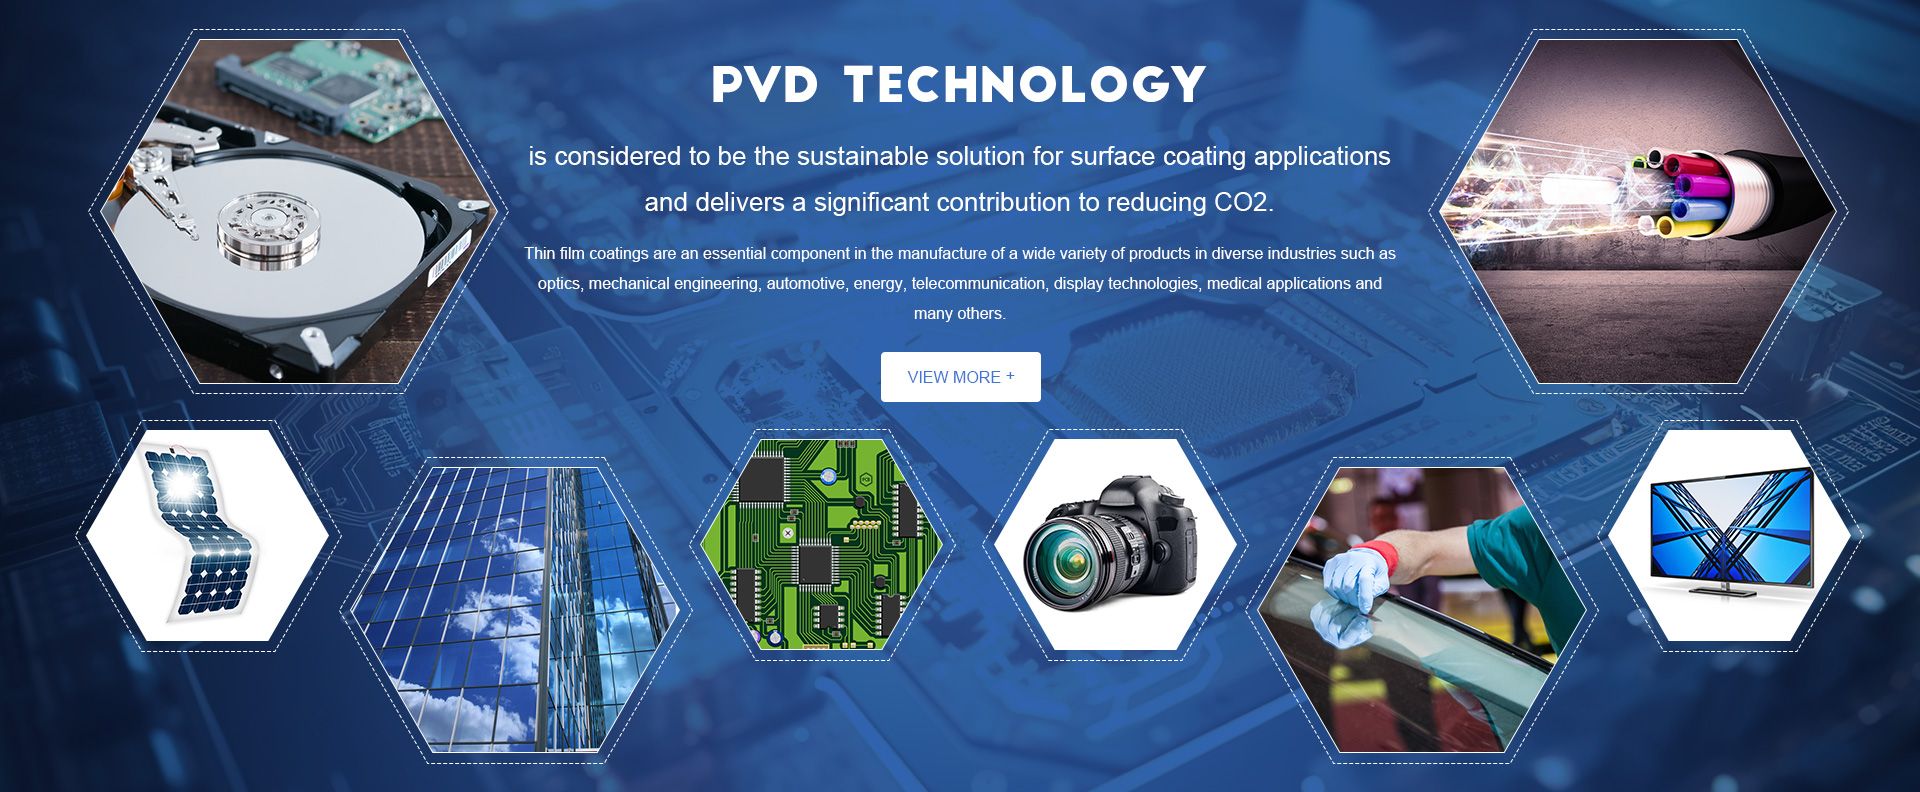 PVD Technology